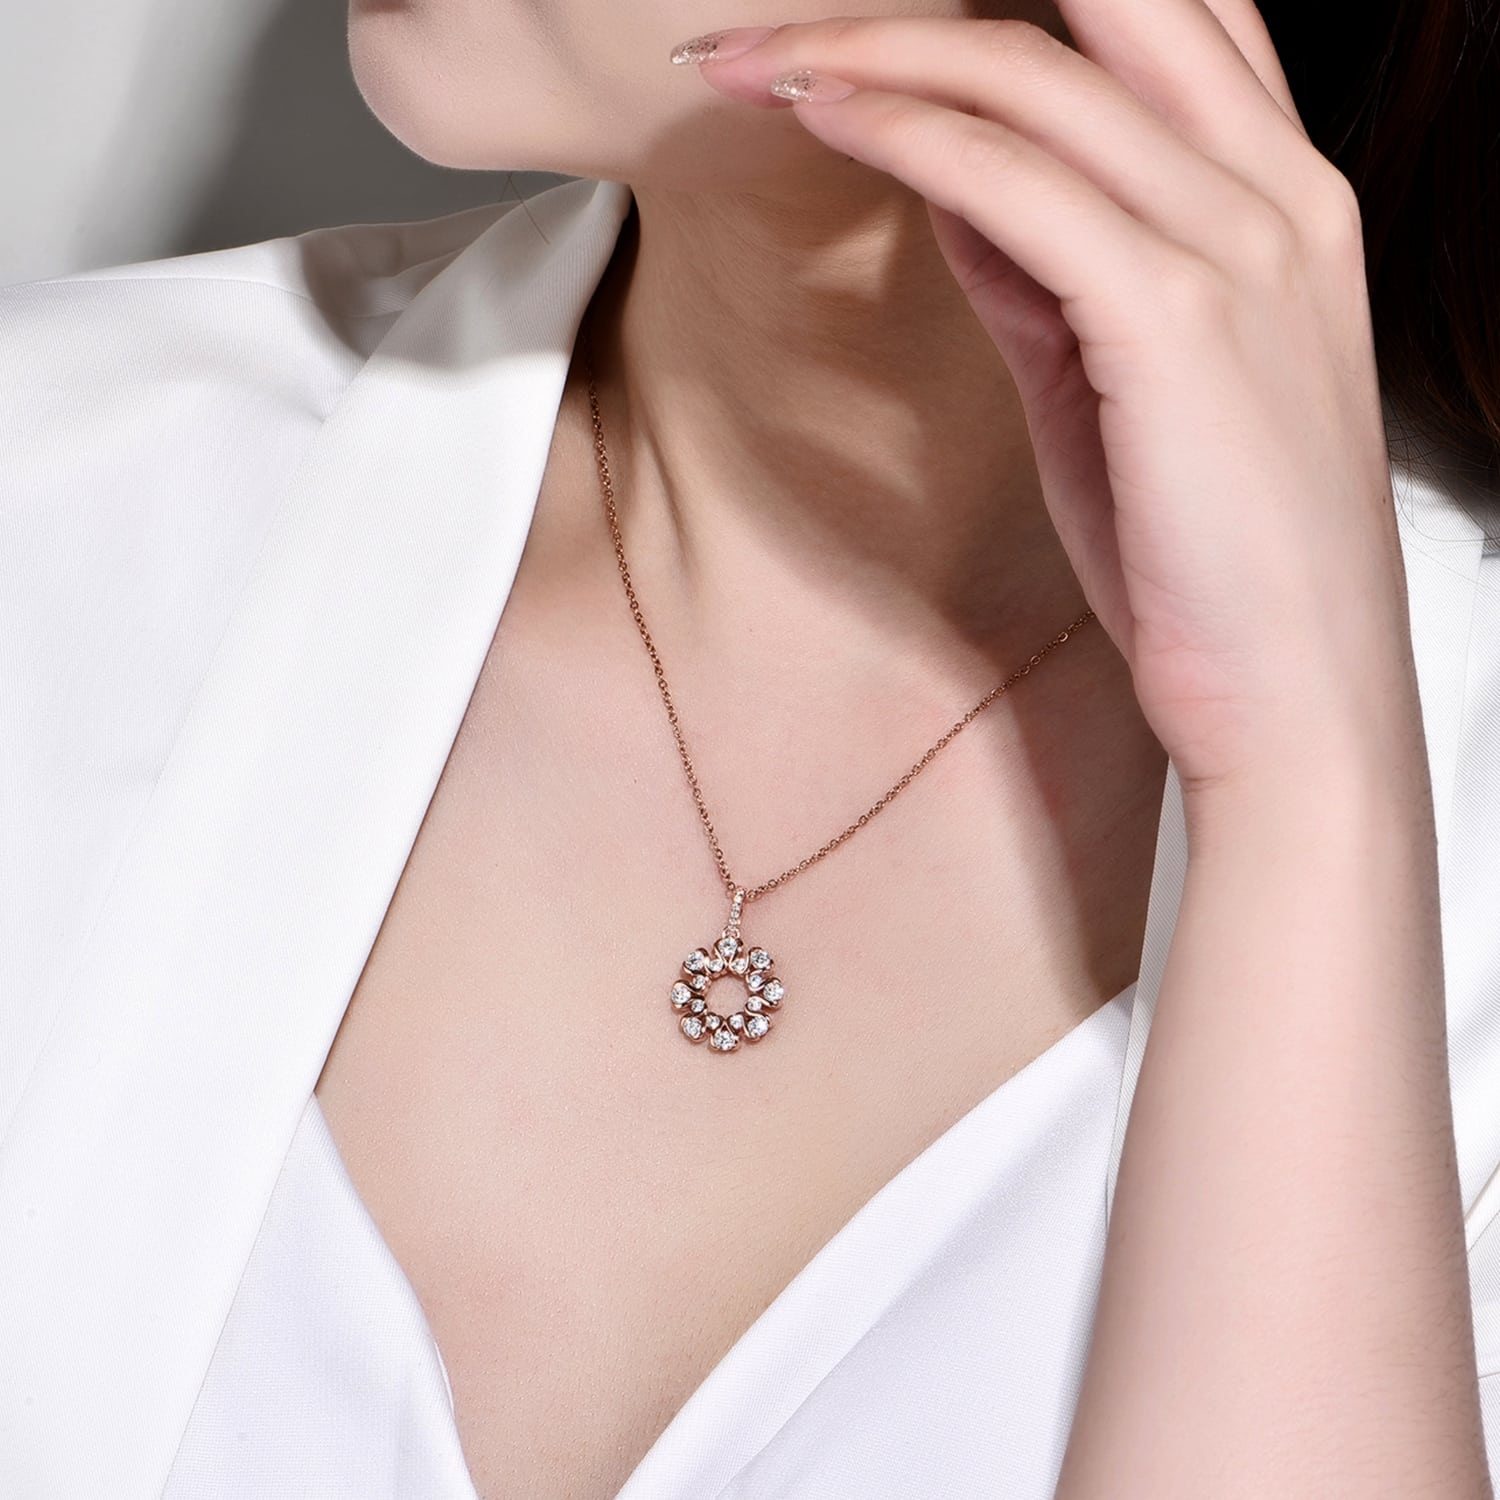 Fei Liu necklace